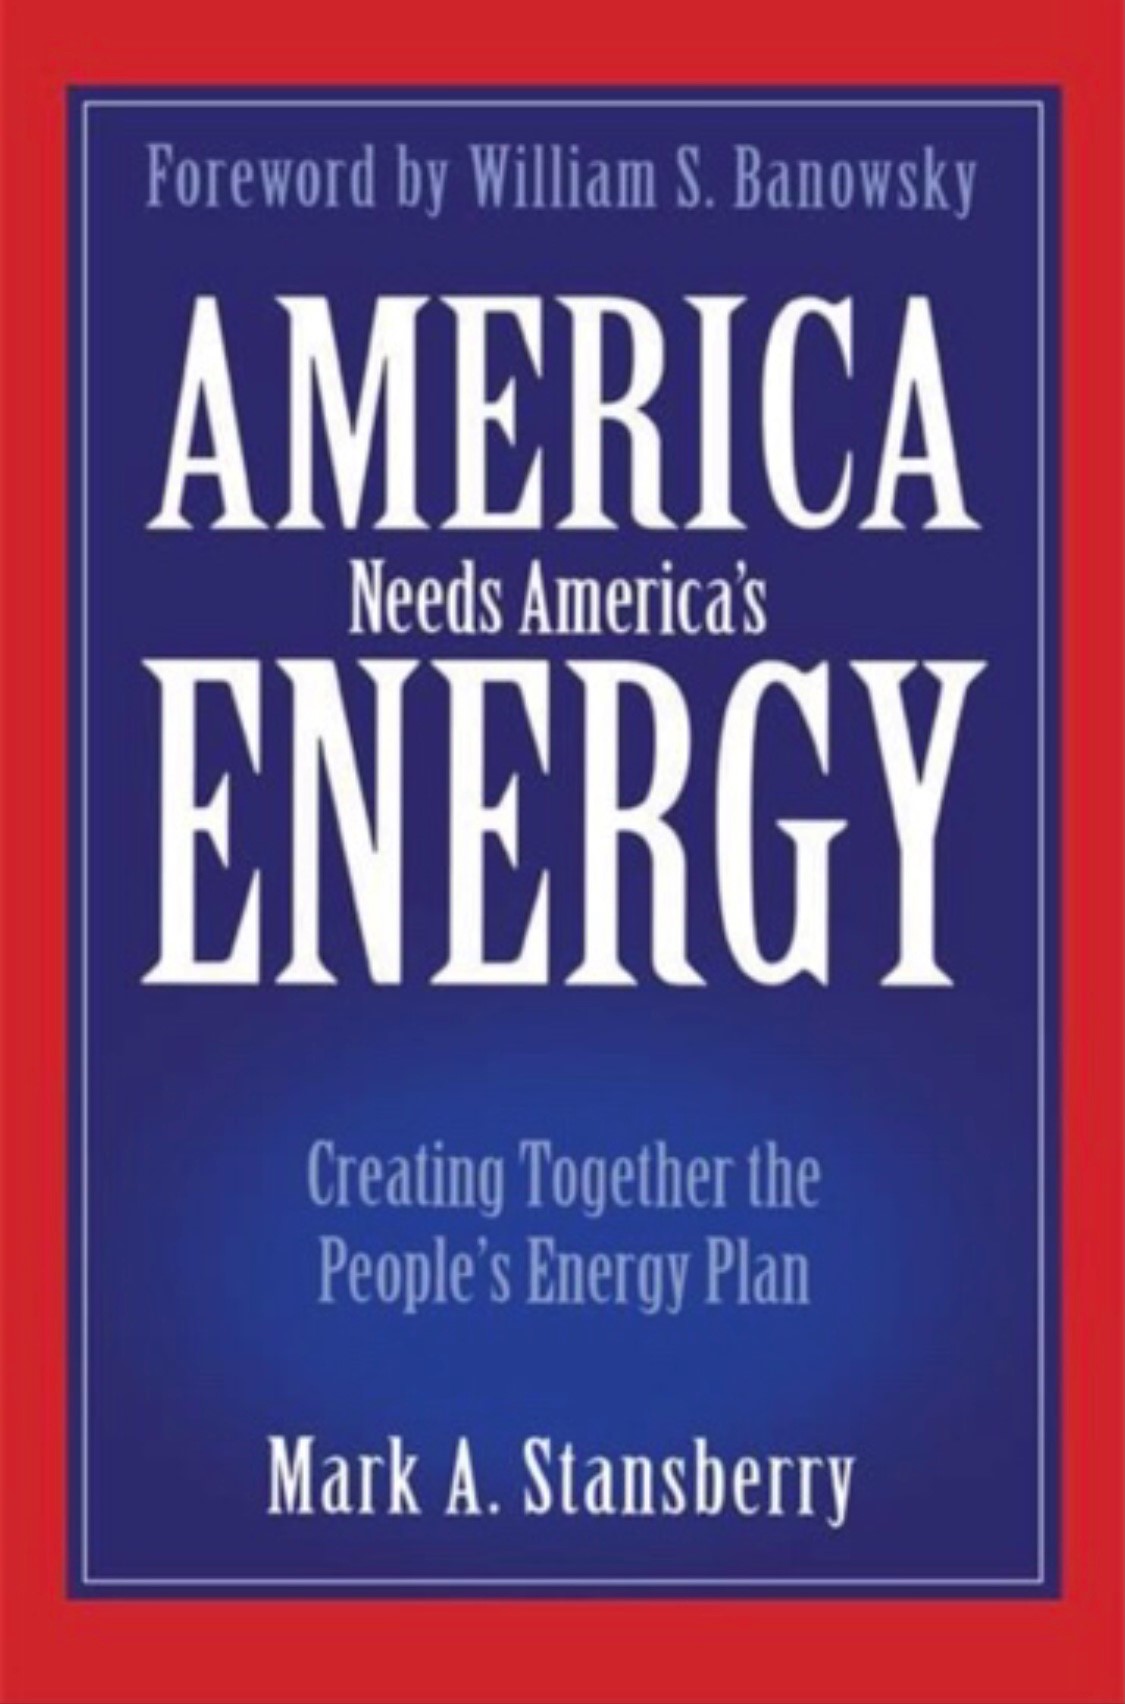 America-needs-america-energy-book-mark-stansberry-book-publicist-dallas